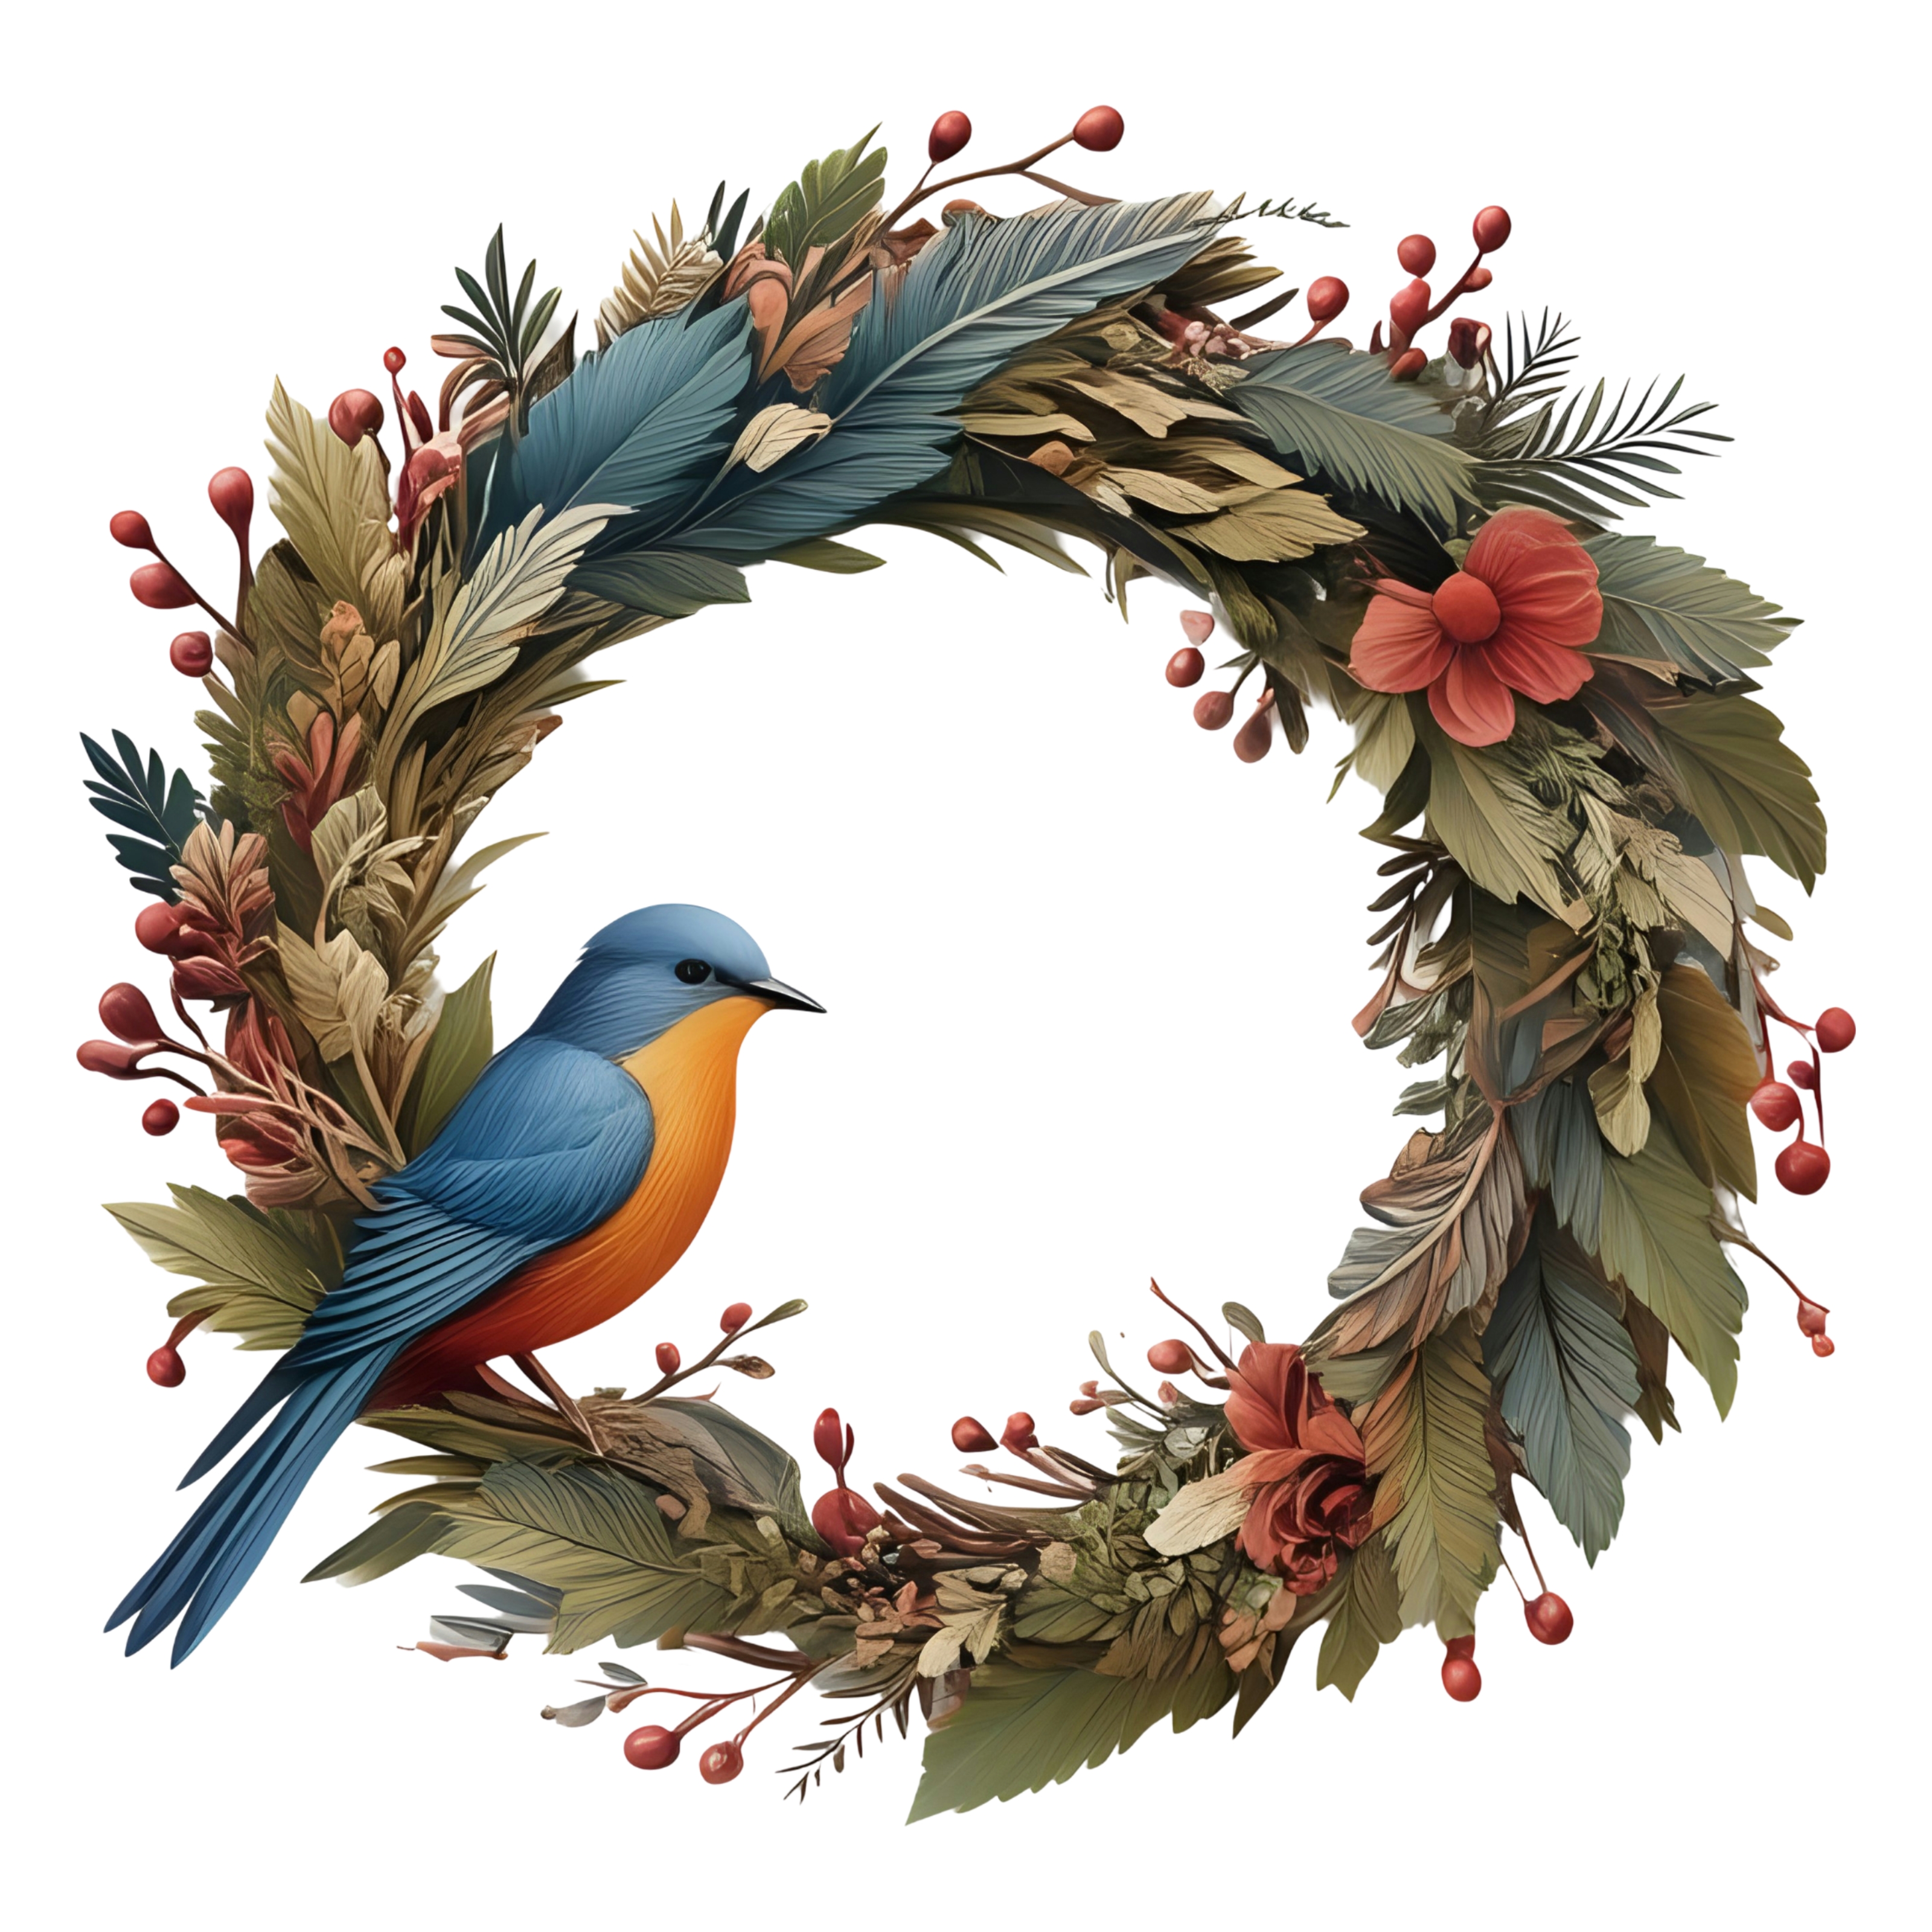 Bird and flowers wreath illustration design